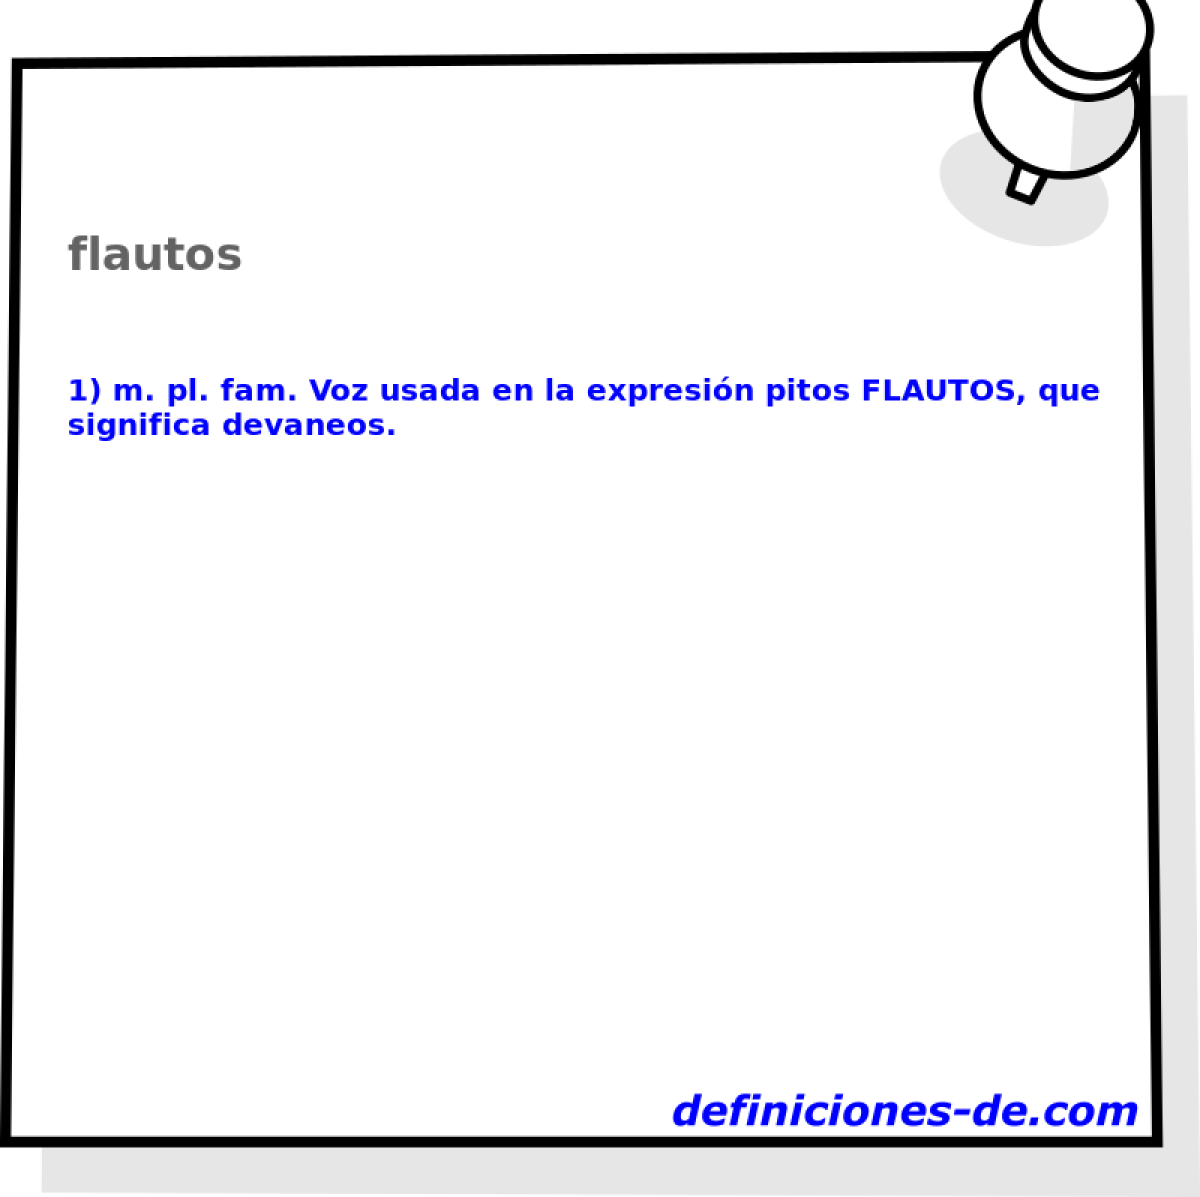 flautos 